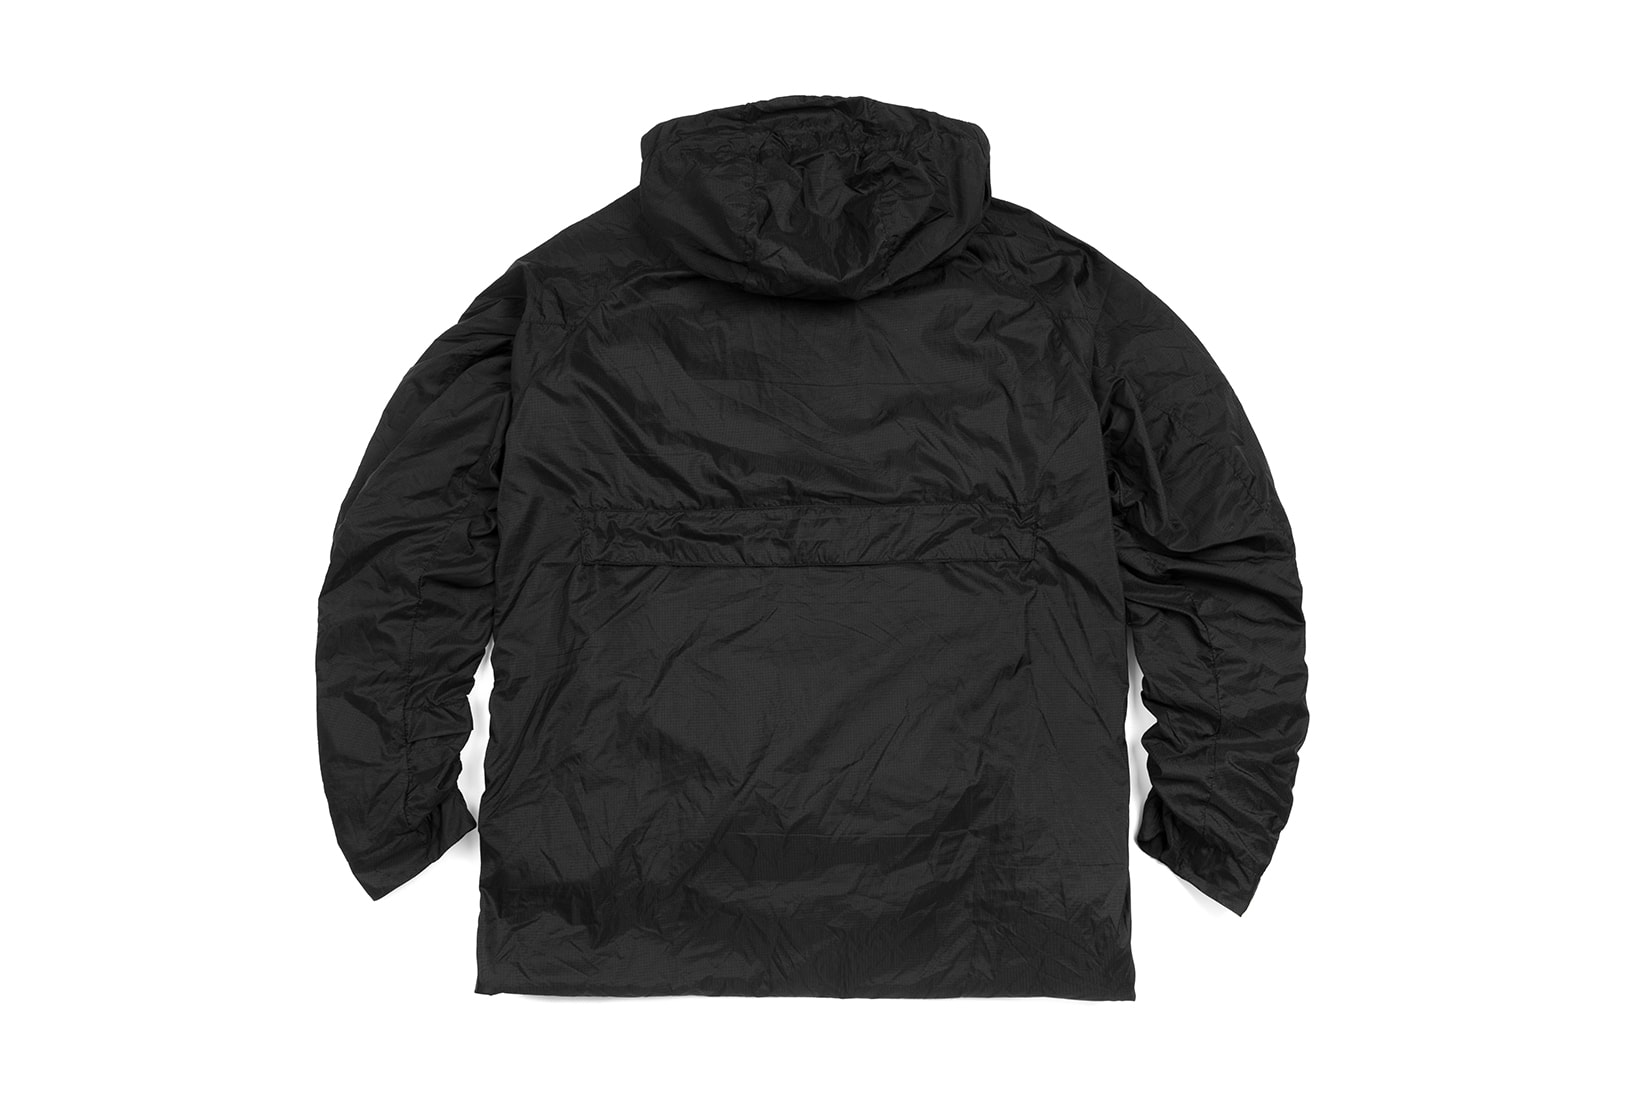 Riot Division City Jacket Kickstarter coat parker water resistant resilient automatic length reduction adjustable sleeves bag